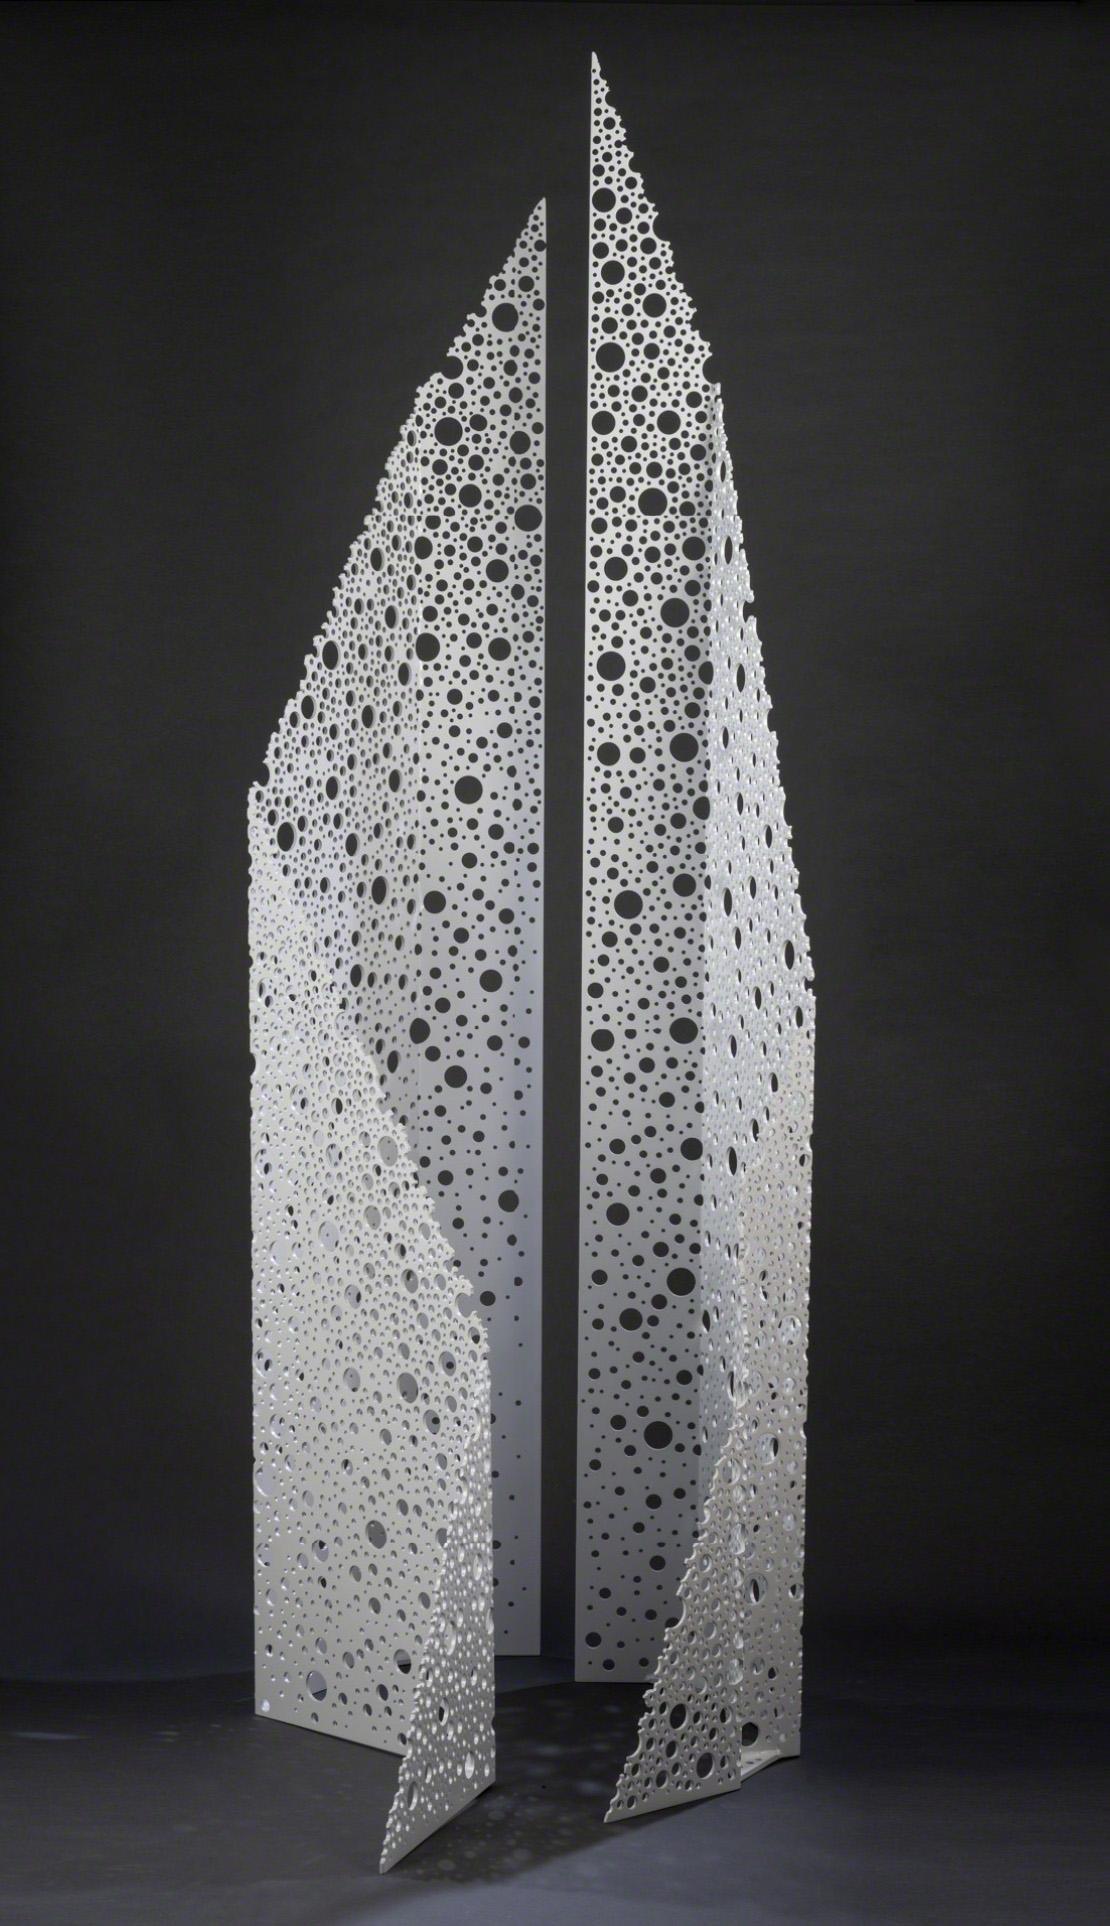 Michael Enn Sirvet Abstract Sculpture - "Sahale Vertices", Minimalist Abstract Metal Sculpture, Aluminum Painted White